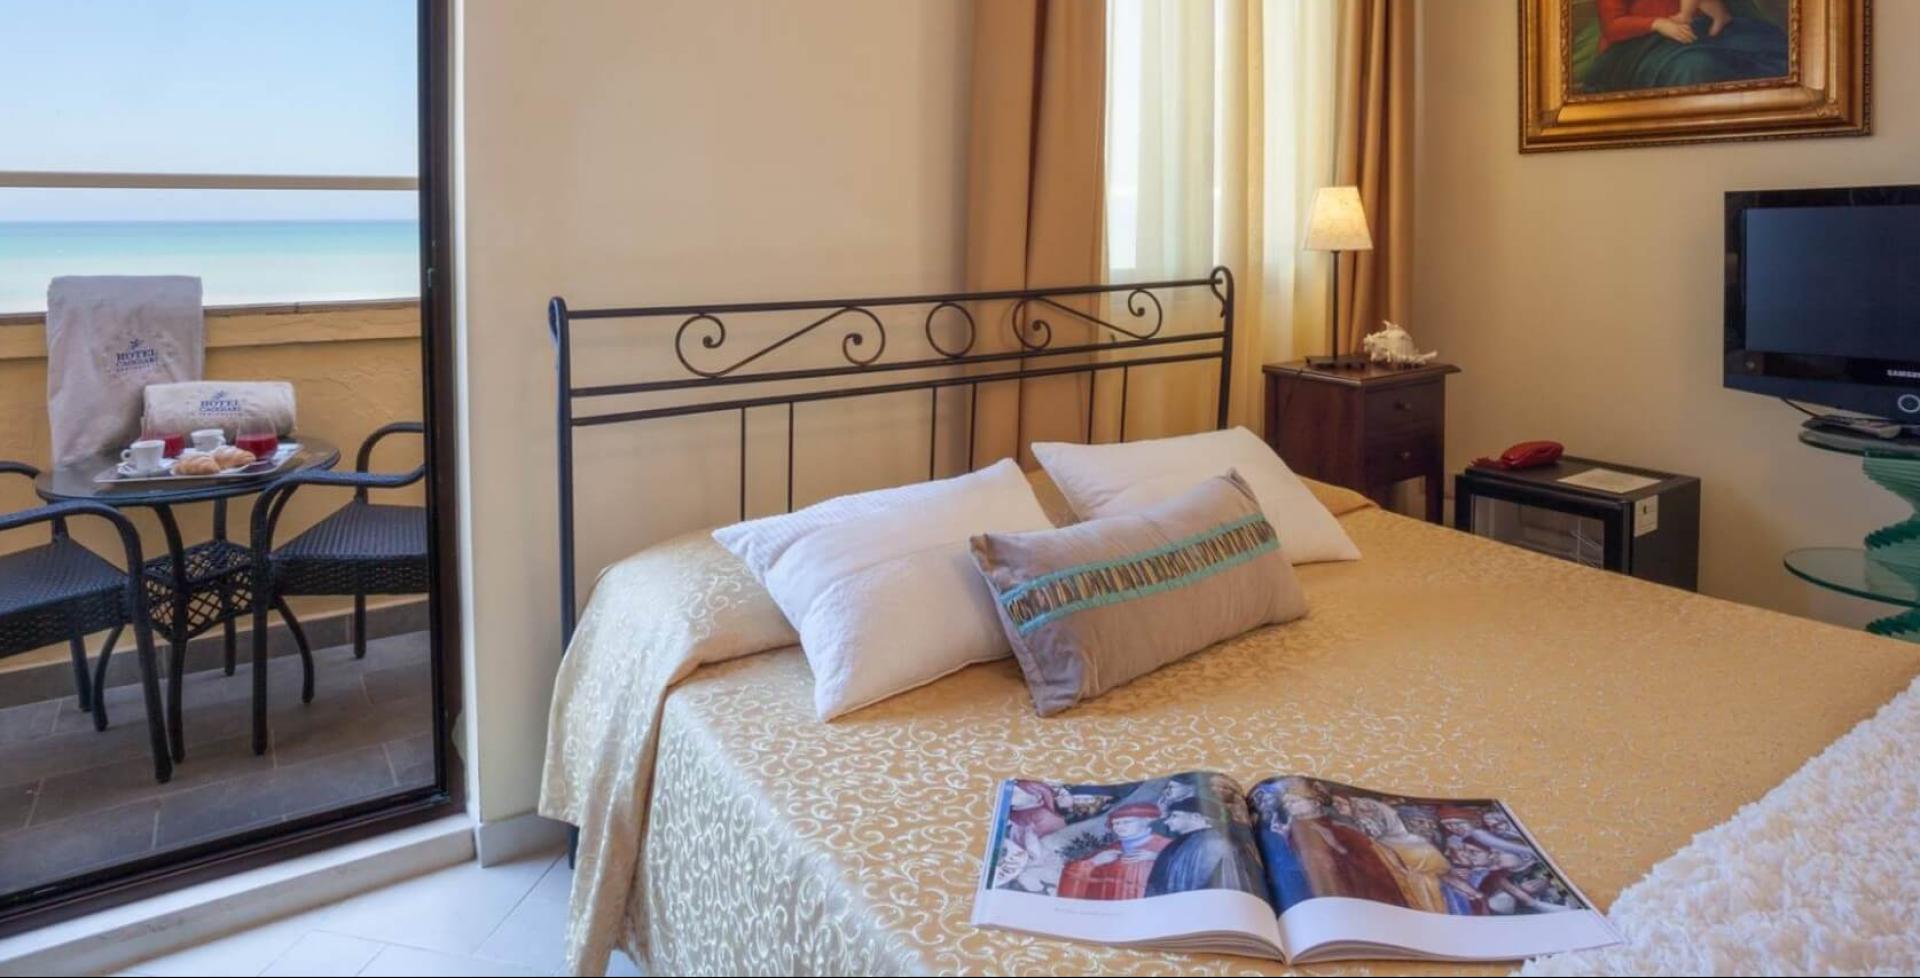 hotelcaggiari it camere-vista-mare-hotel-senigallia-3-stelle 004